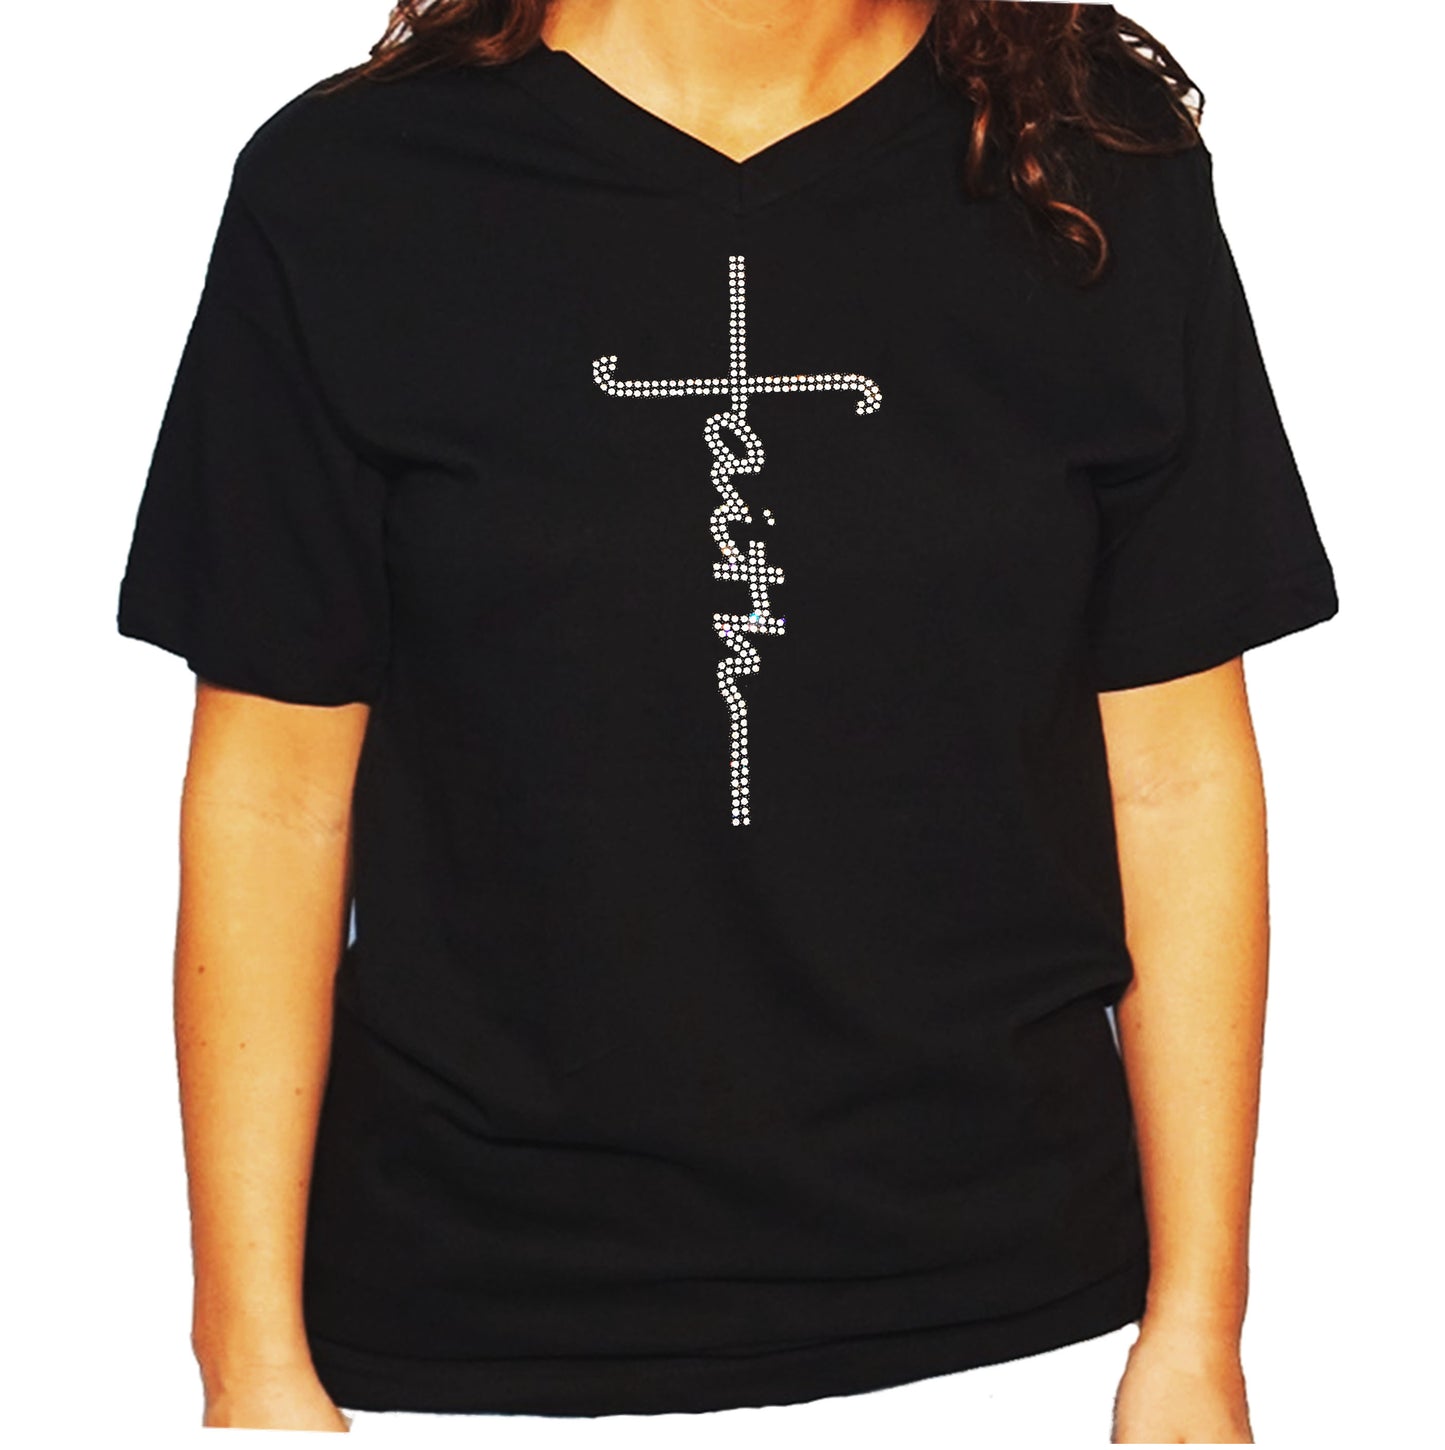 Women's / Unisex T-Shirt with Faith Script Cross in Rhinestones